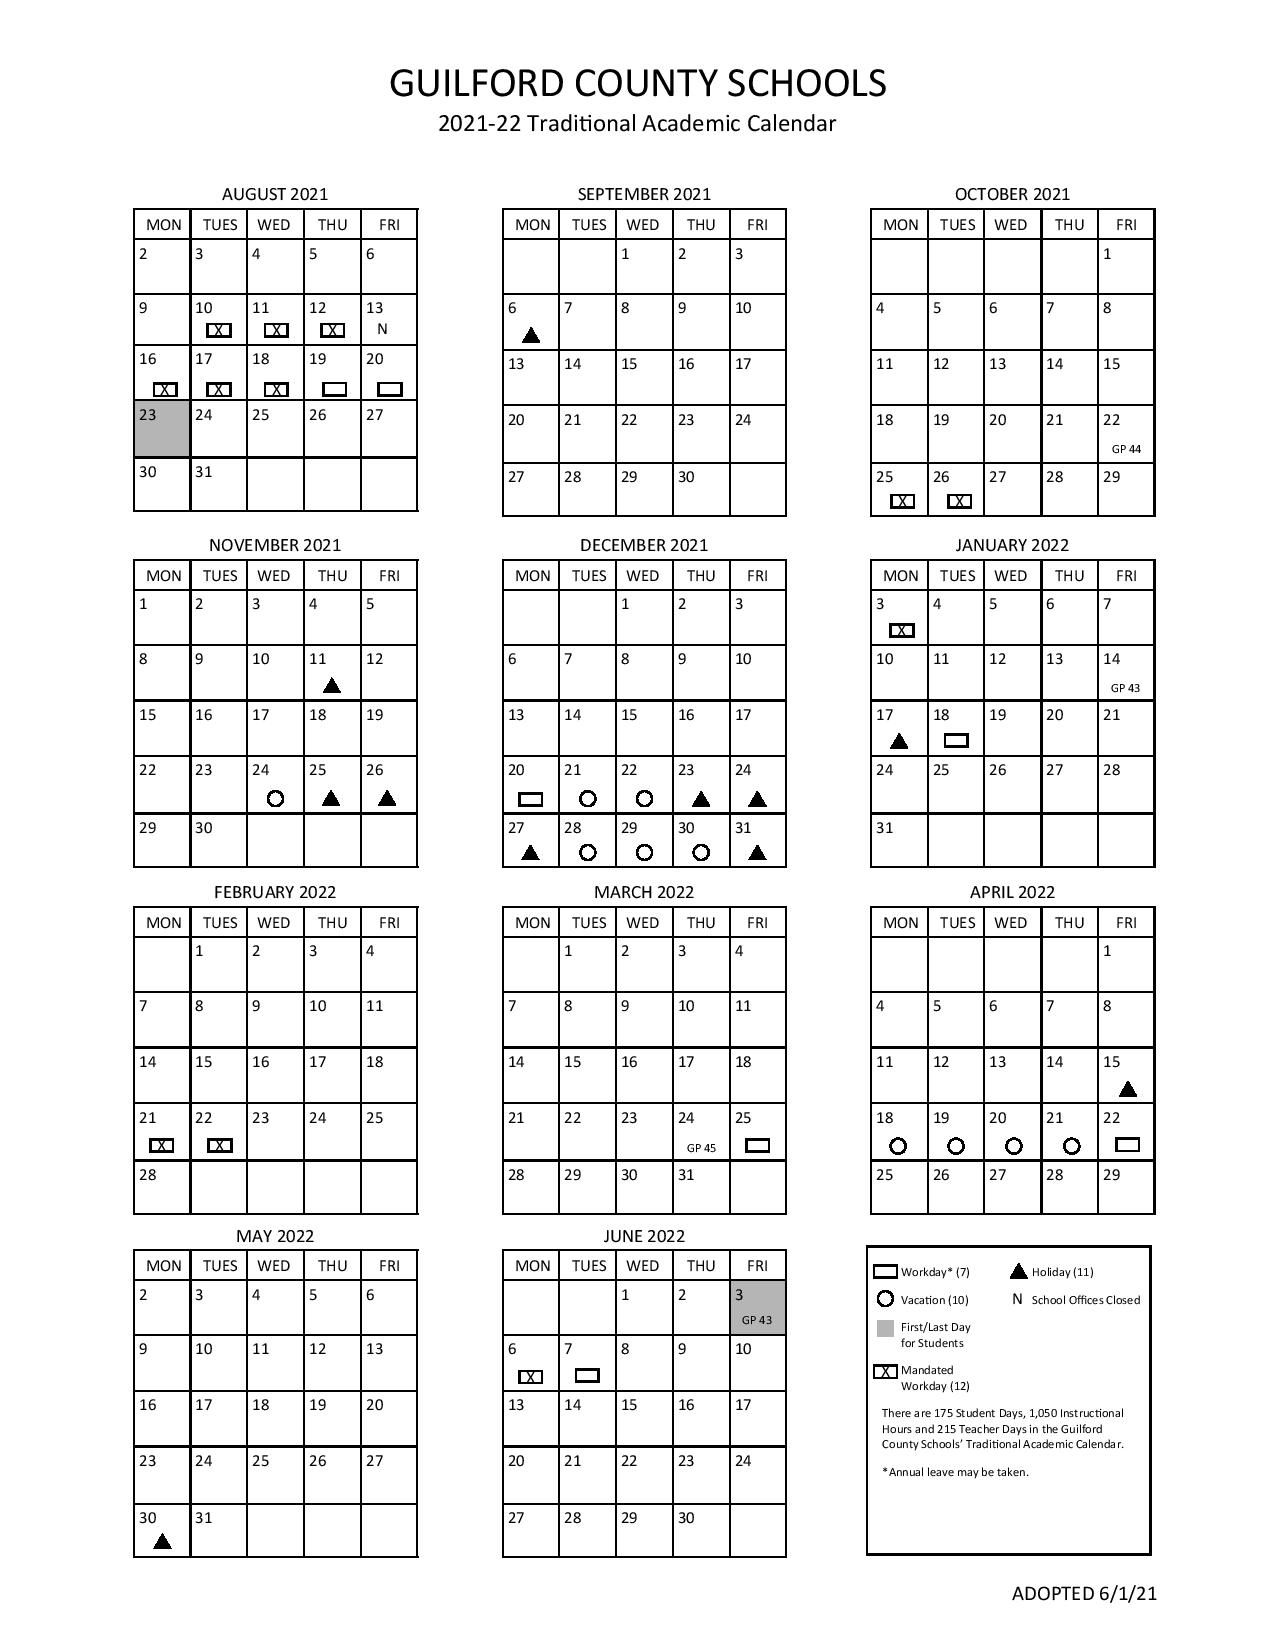 Guilford County School Calendar 2021 2022 In Pdf